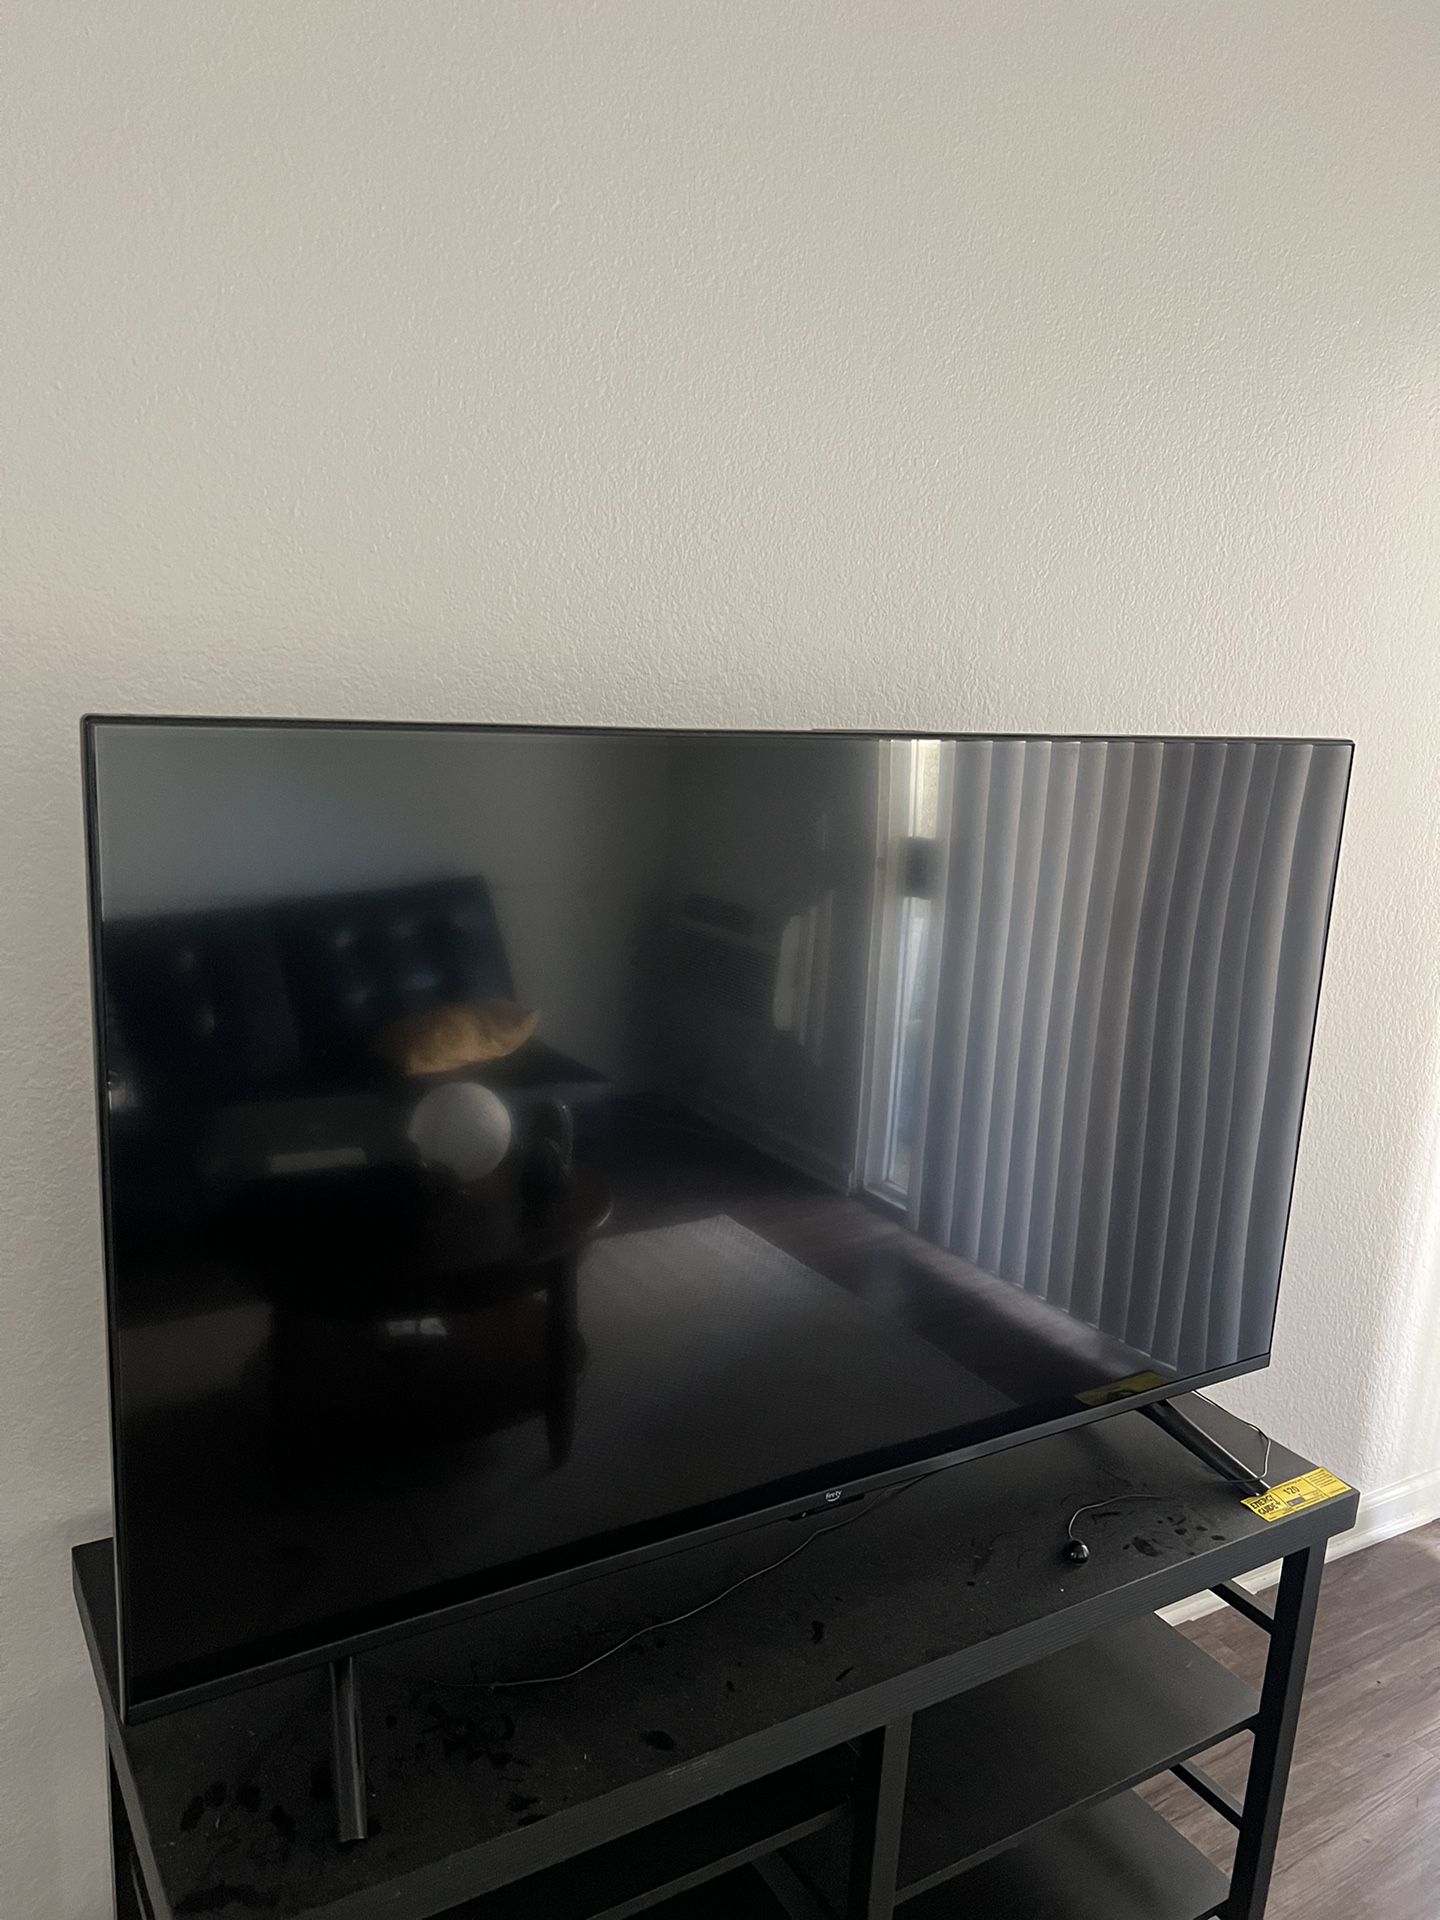 Amazon Fire TV 55” Omni Series 4k UHD Smart TV